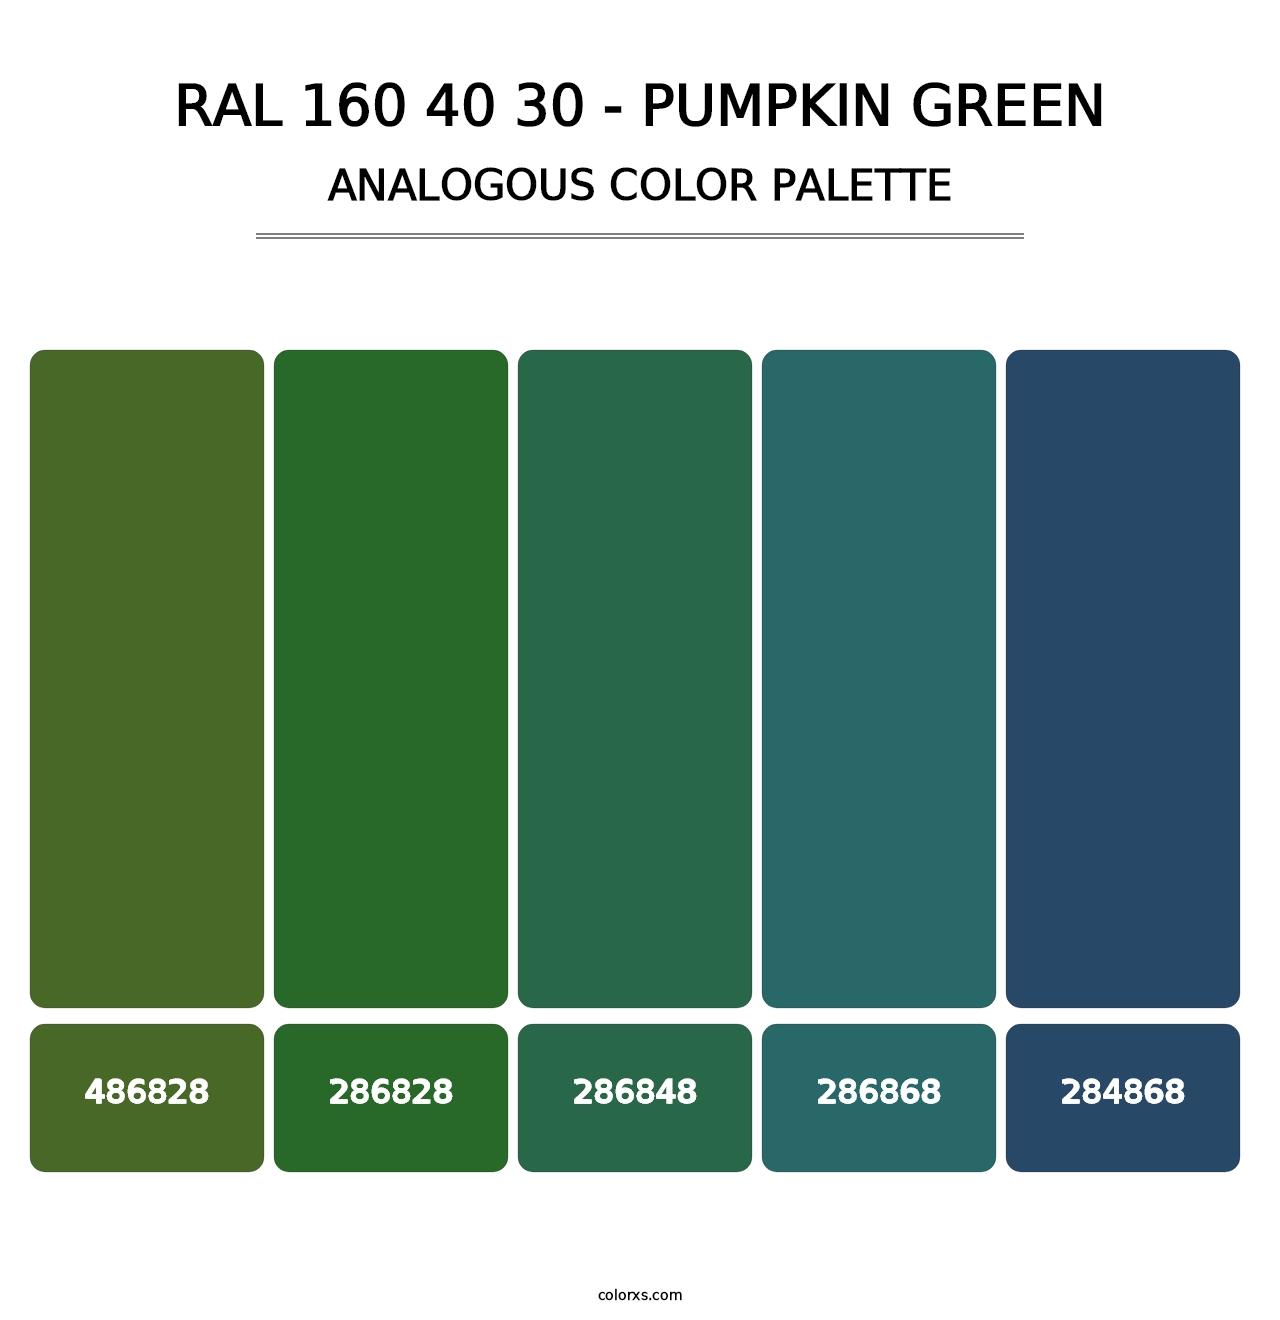 RAL 160 40 30 - Pumpkin Green - Analogous Color Palette